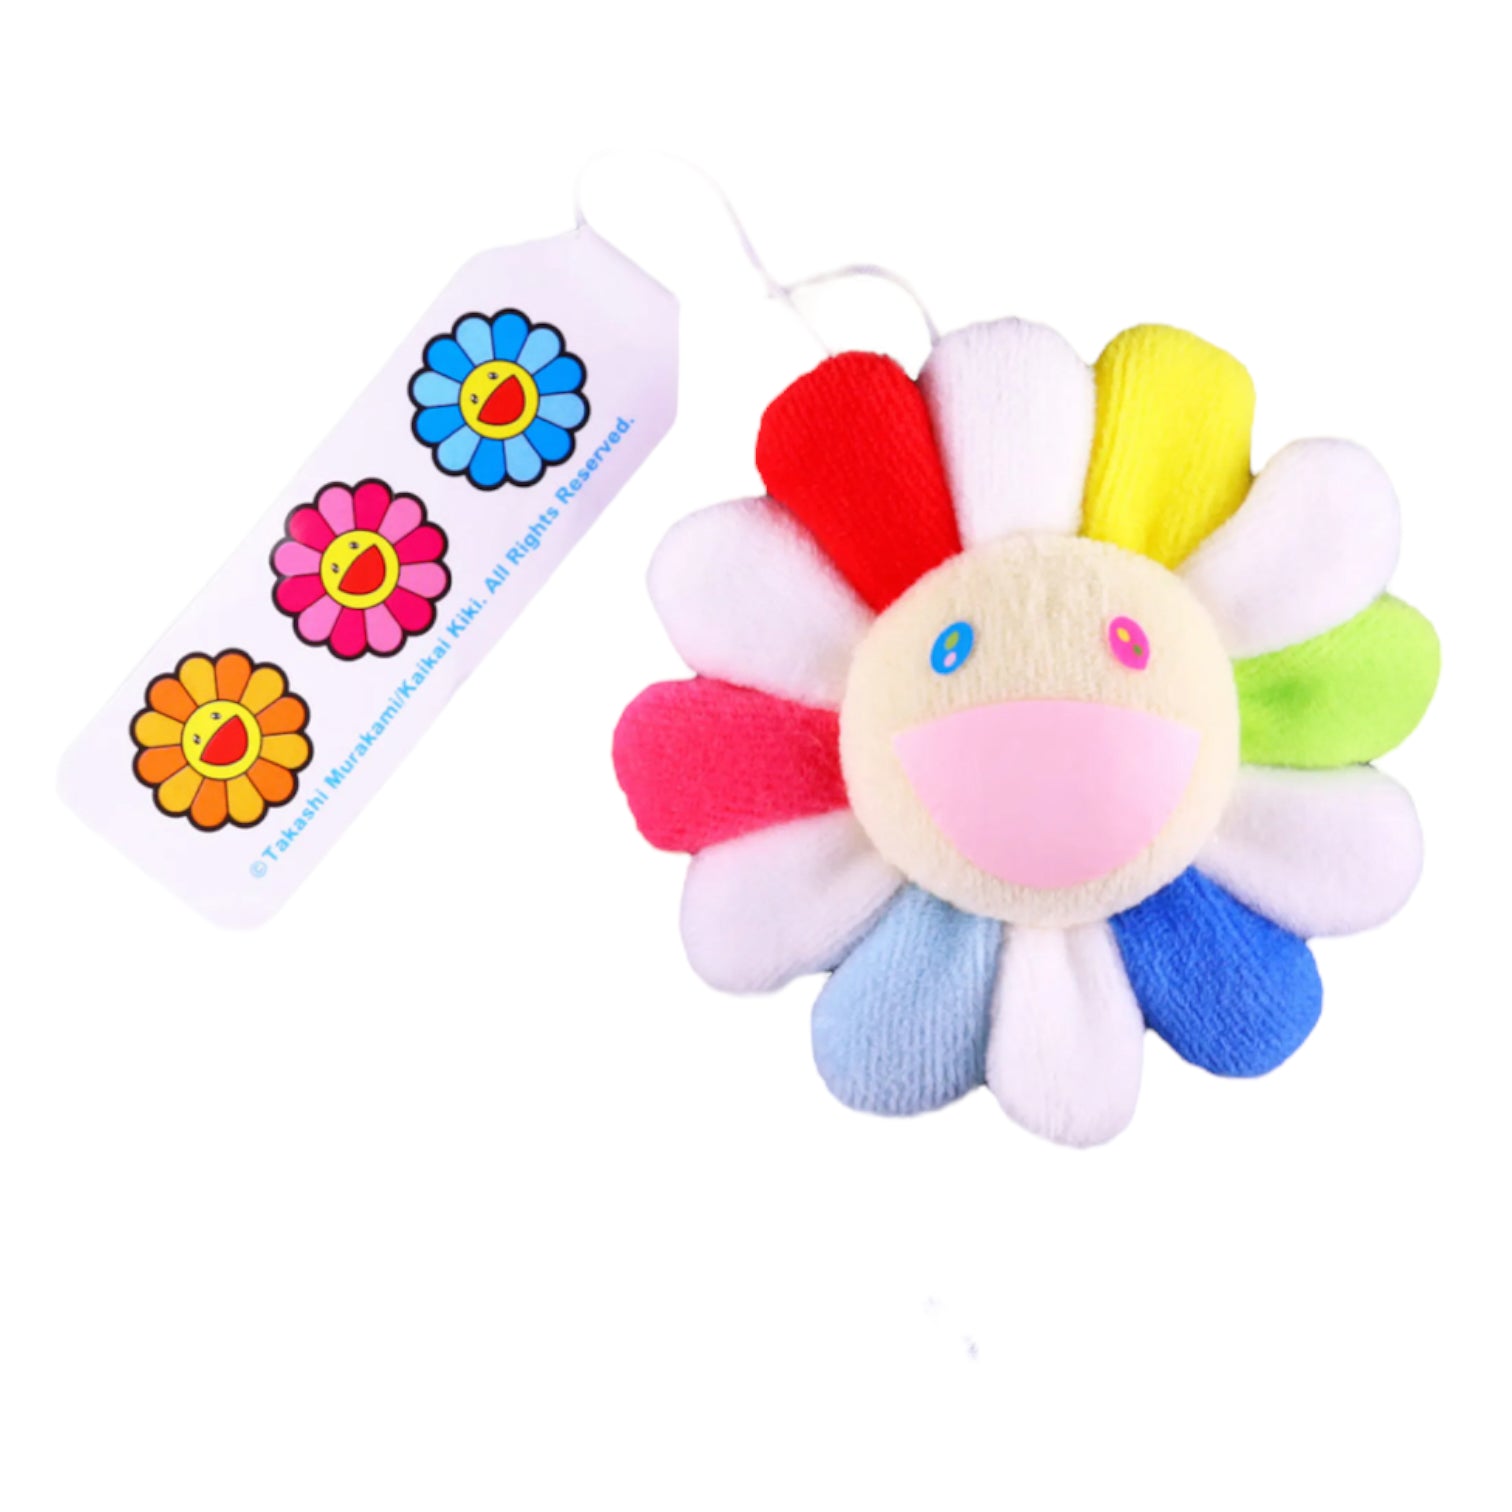 Takashi Murakami Flower Plush Pin - Multicolor Collectible Pin